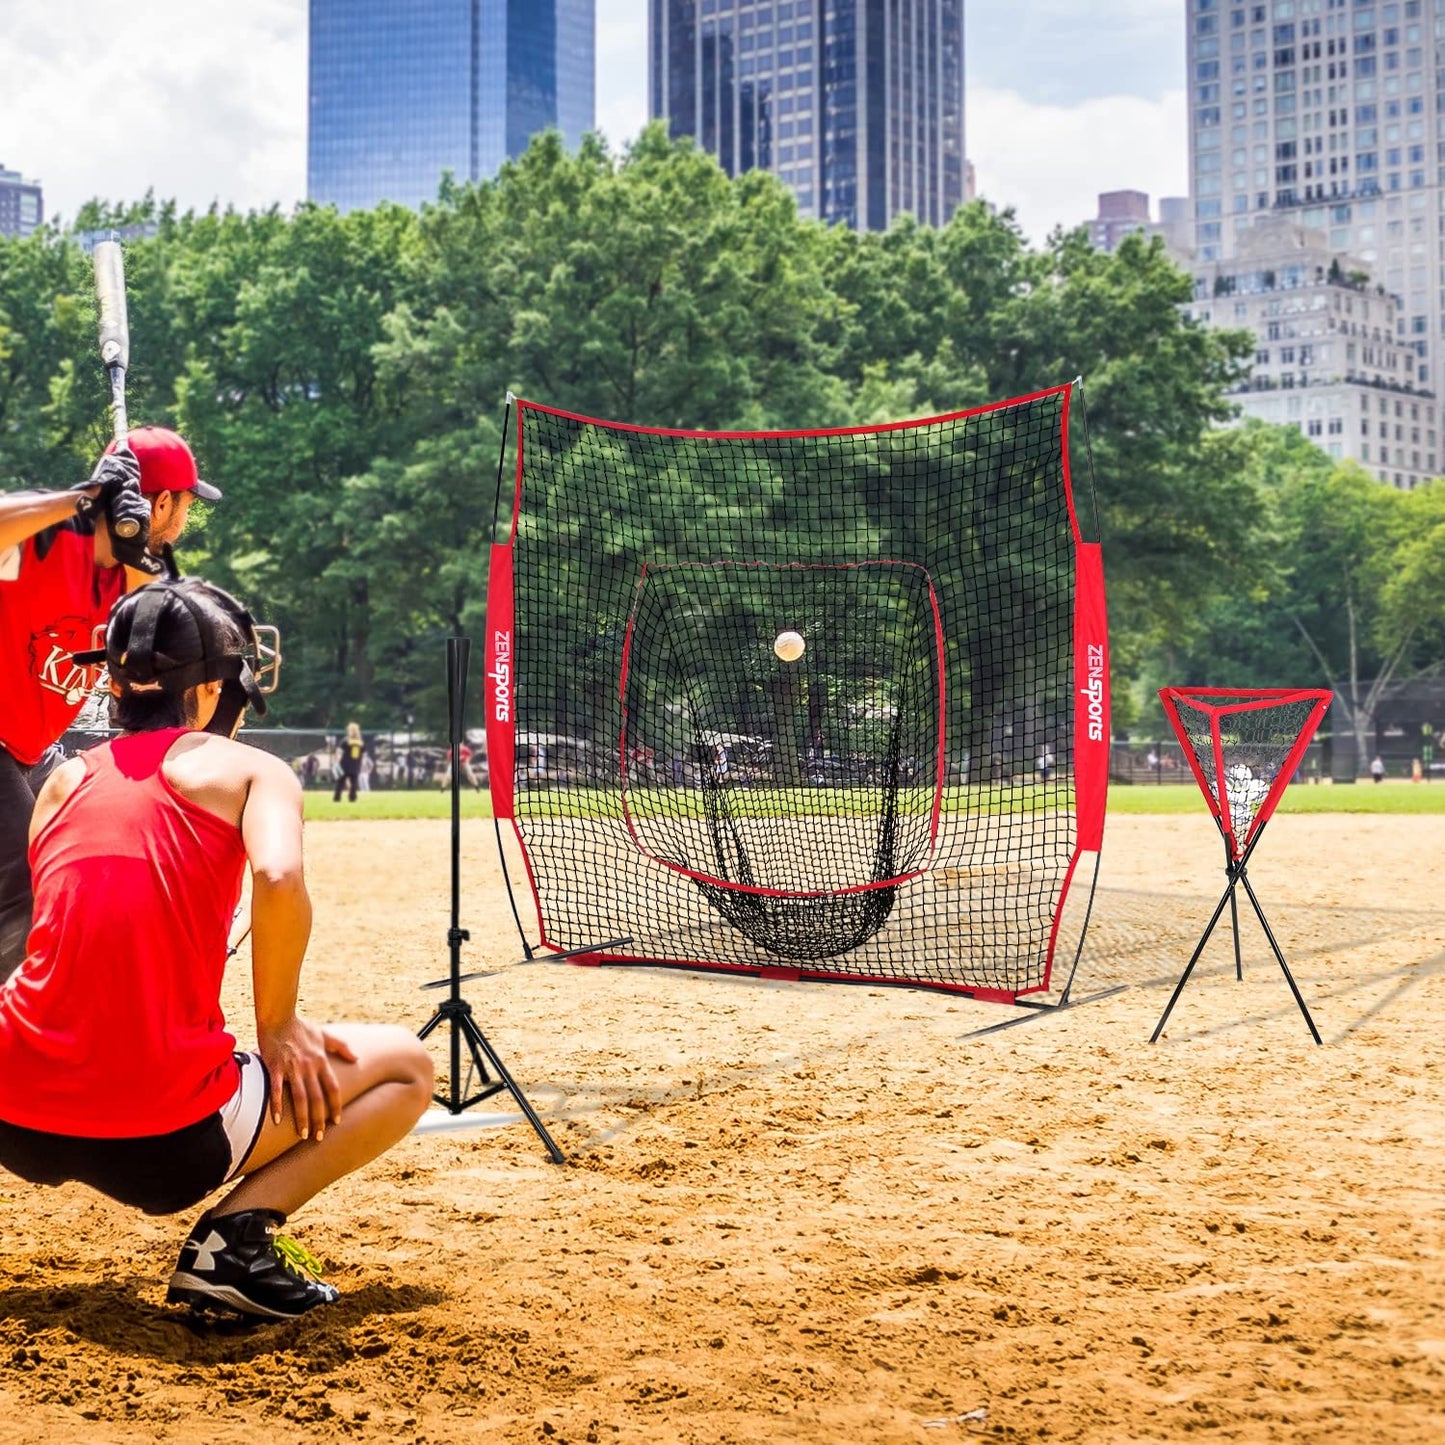 Baseball 7' x 7' Softball Practice Net and Tee Ball Caddy Combo Set for Outdoor Backyard Pitching Fielding Batting